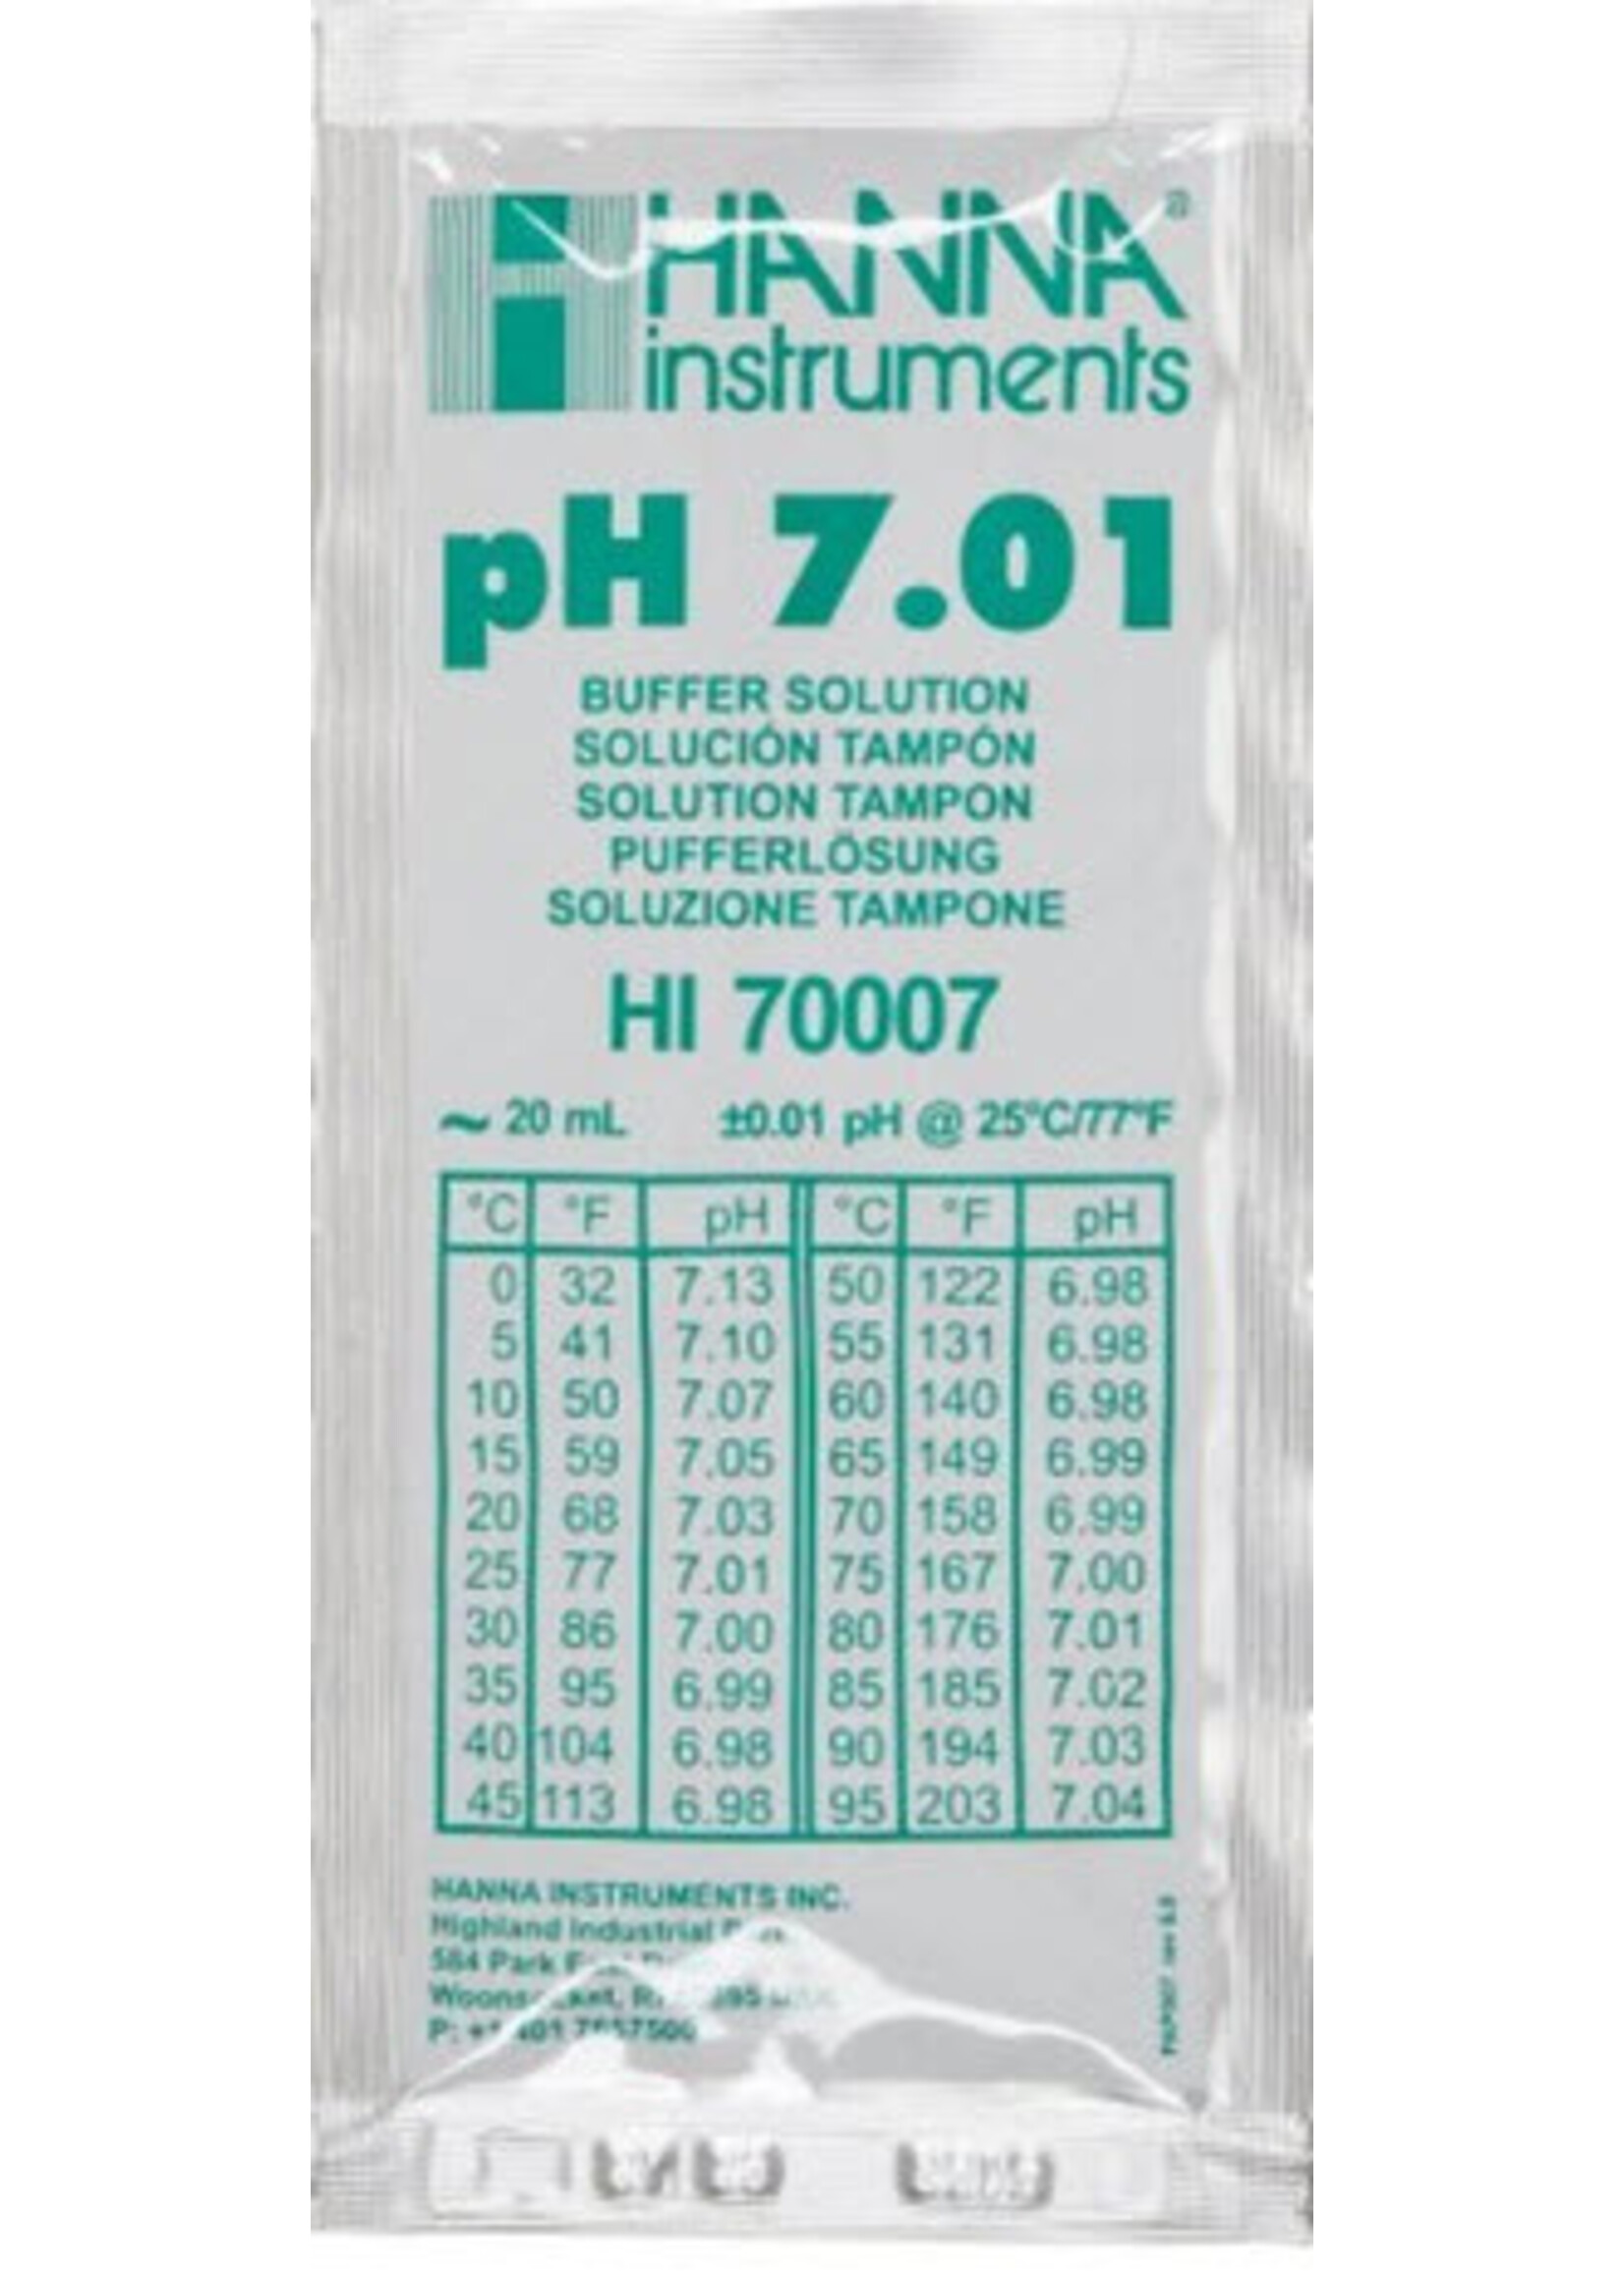 Hanna Instruments SOLUTION CAL PH 7.01